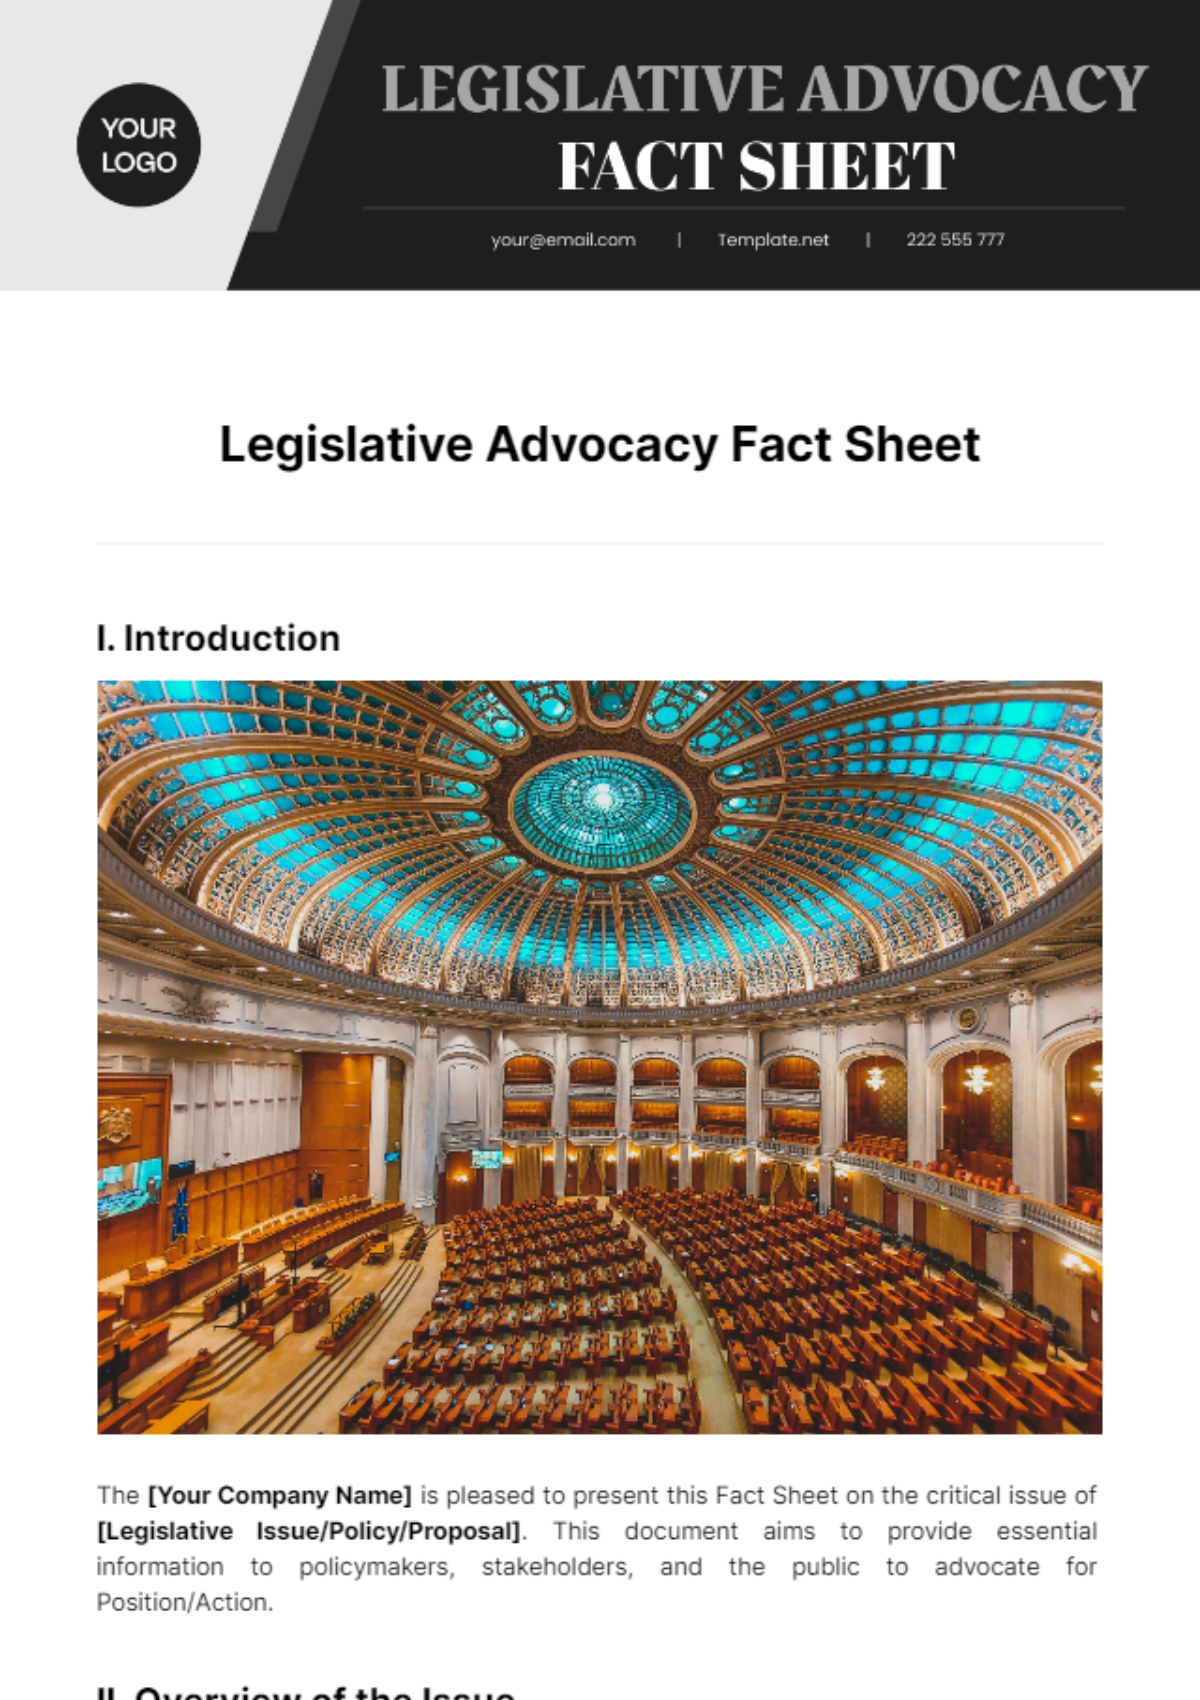 Legislative Advocacy Fact Sheet Template